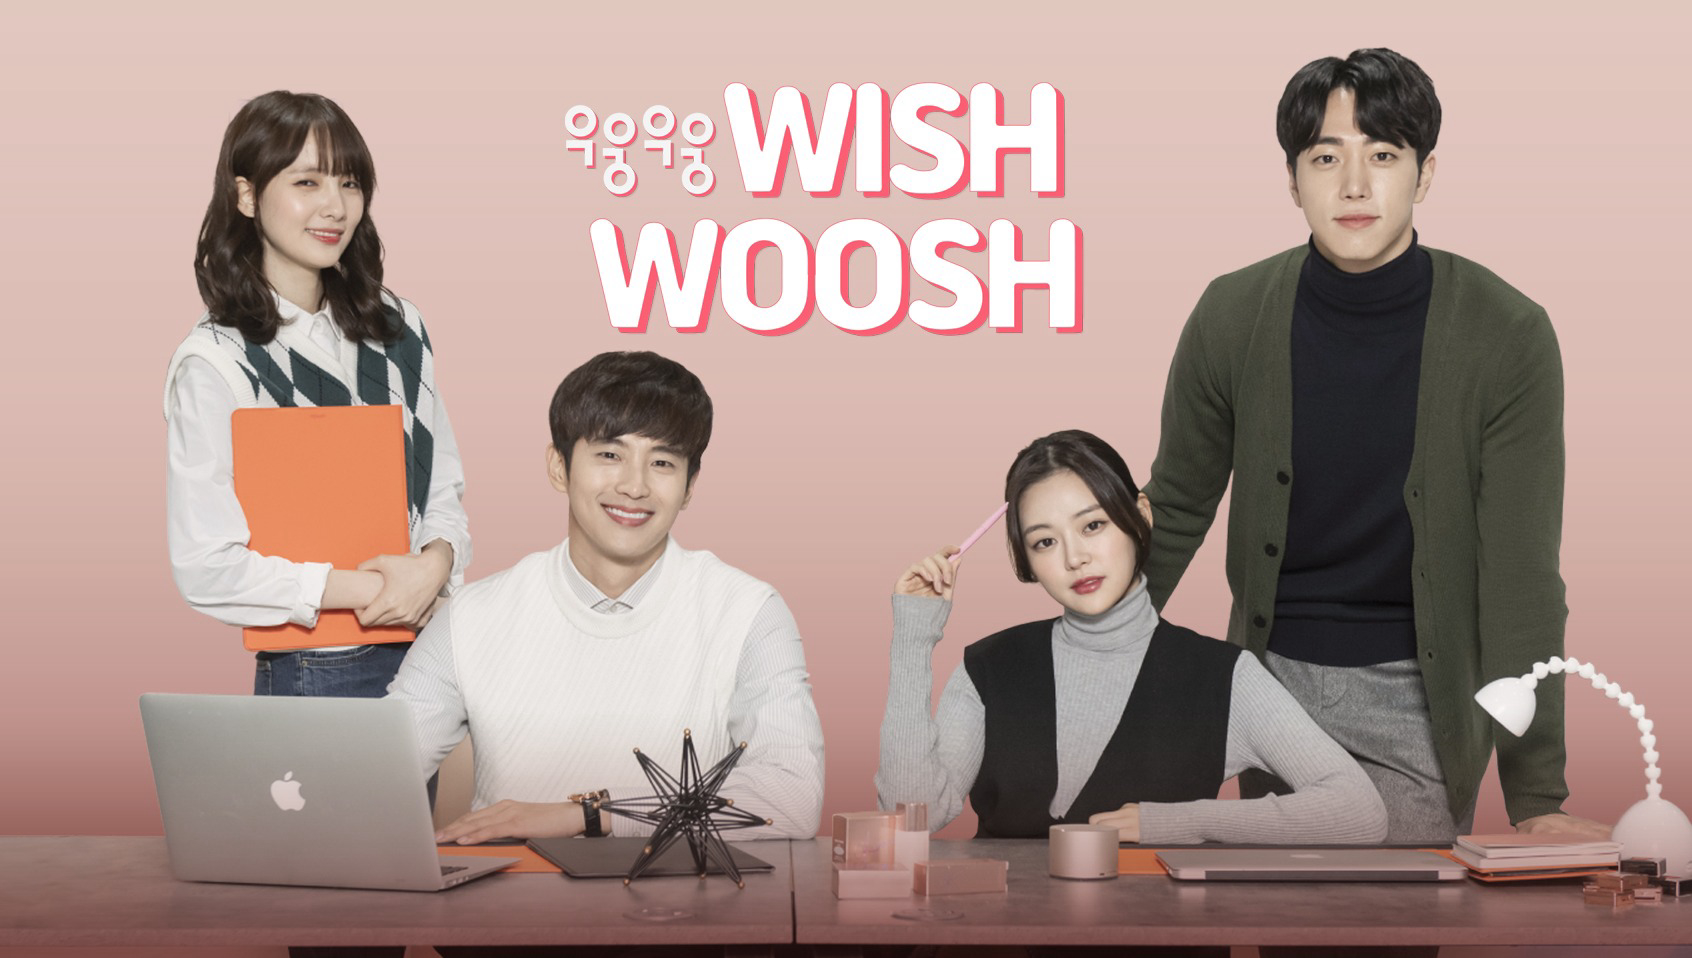 Mật Mã Tình Yêu 1 Wish Woosh Season 1